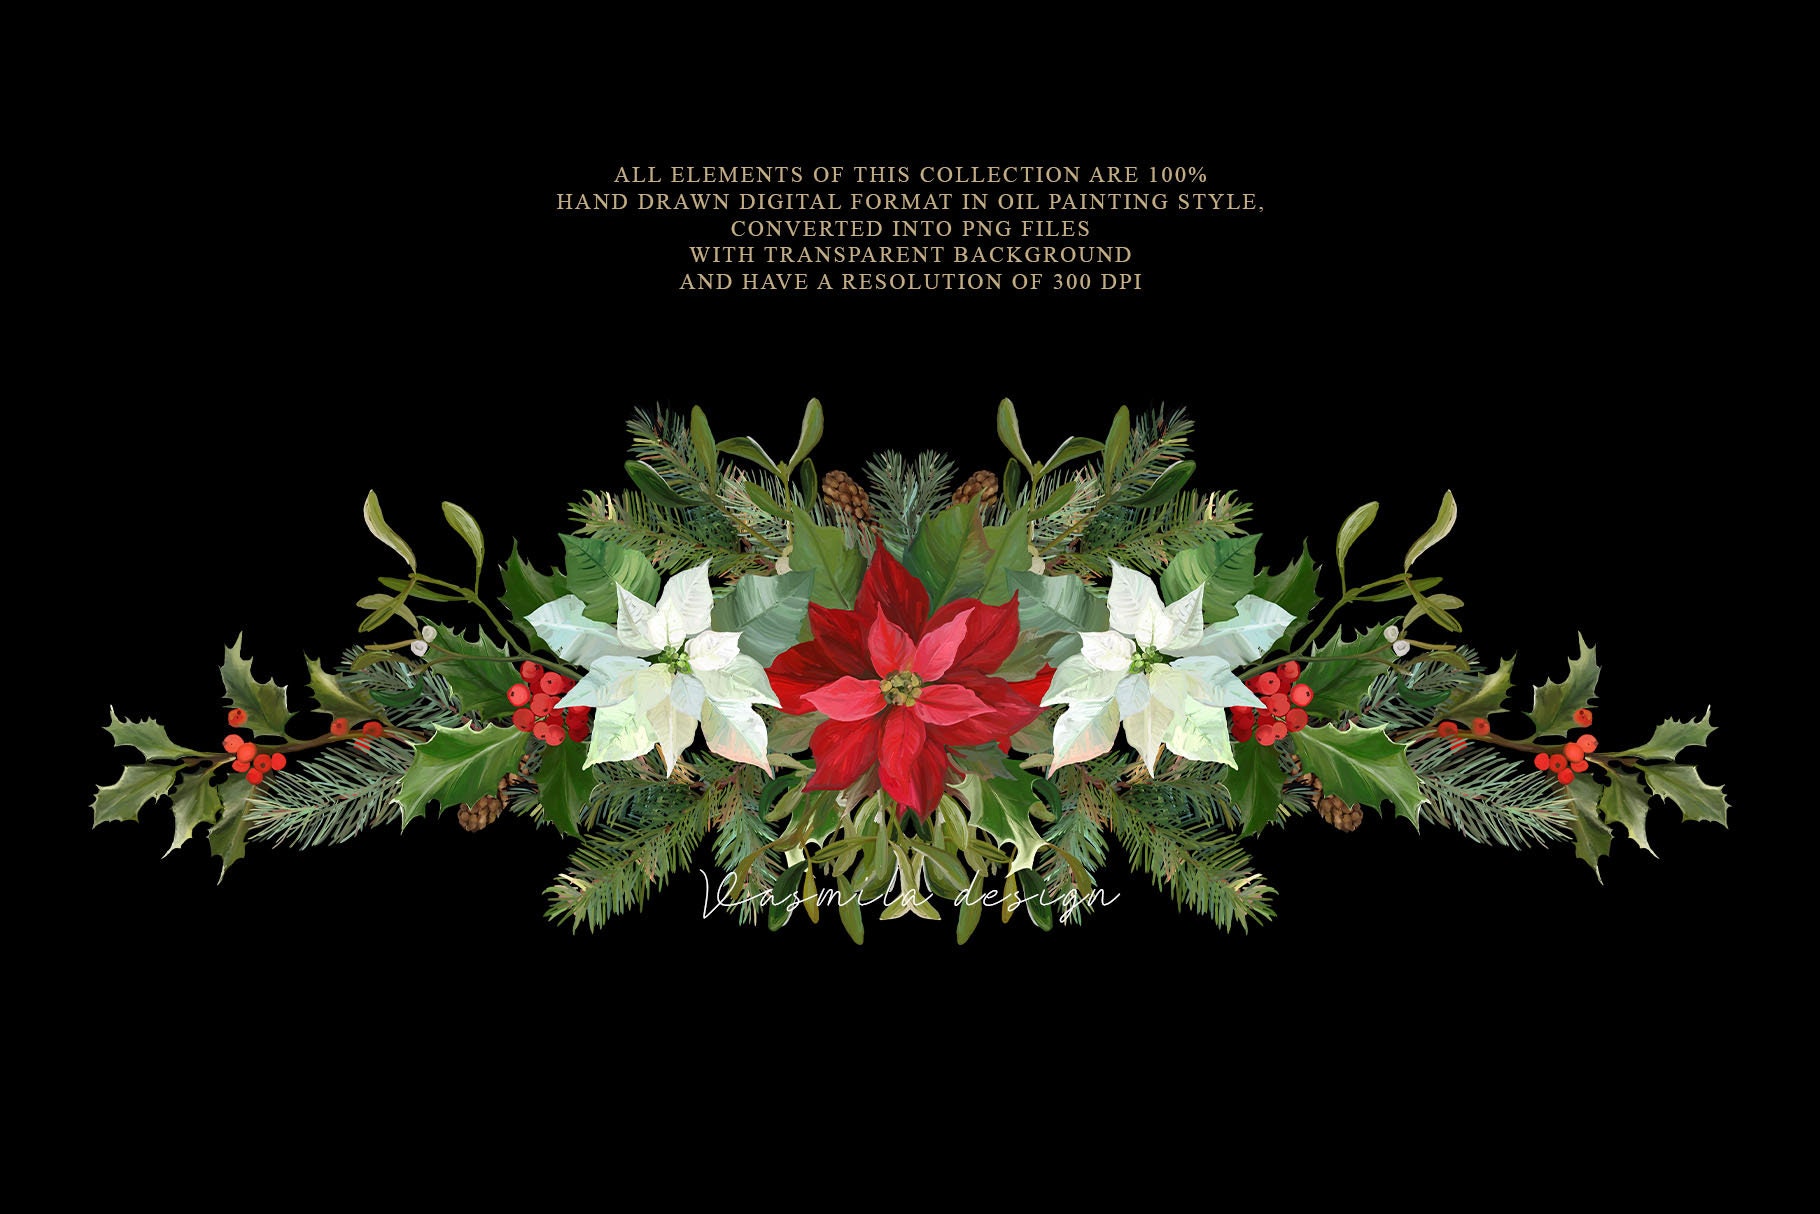 Christmas Floral Frames PNG, Winter Flowers Garlands By Vasmila